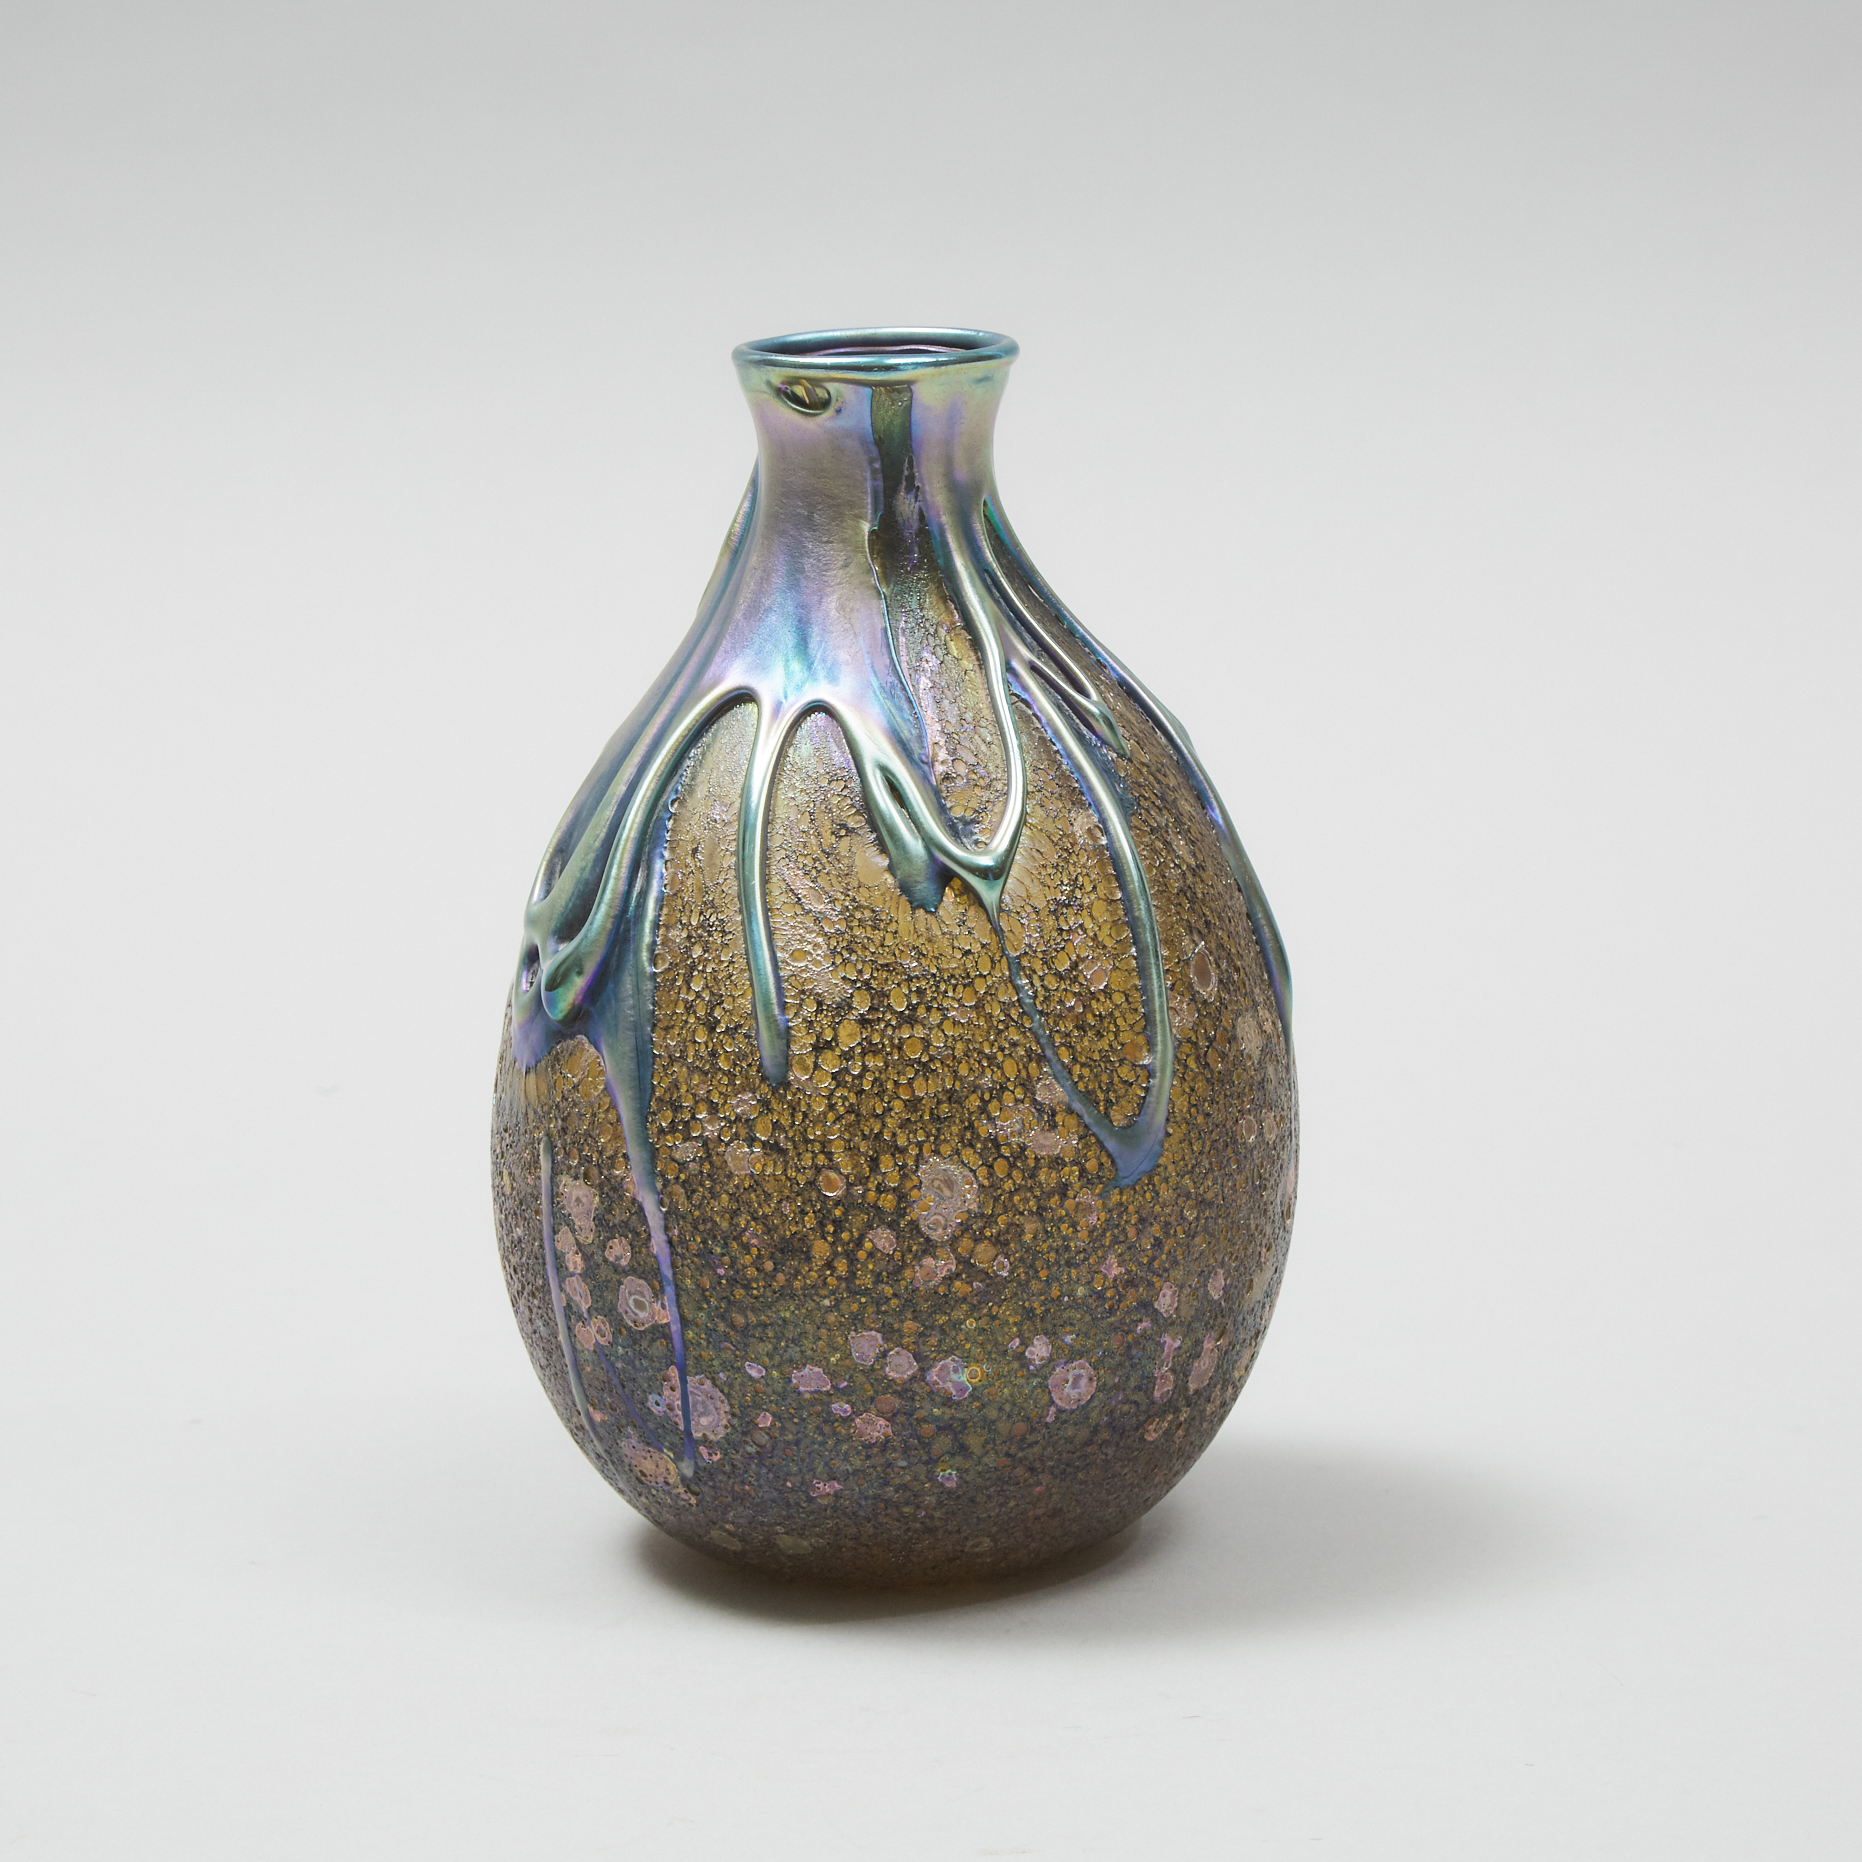 Charles Lotton (American, b.1935), 'Cypriot' Glass Vase, 1977